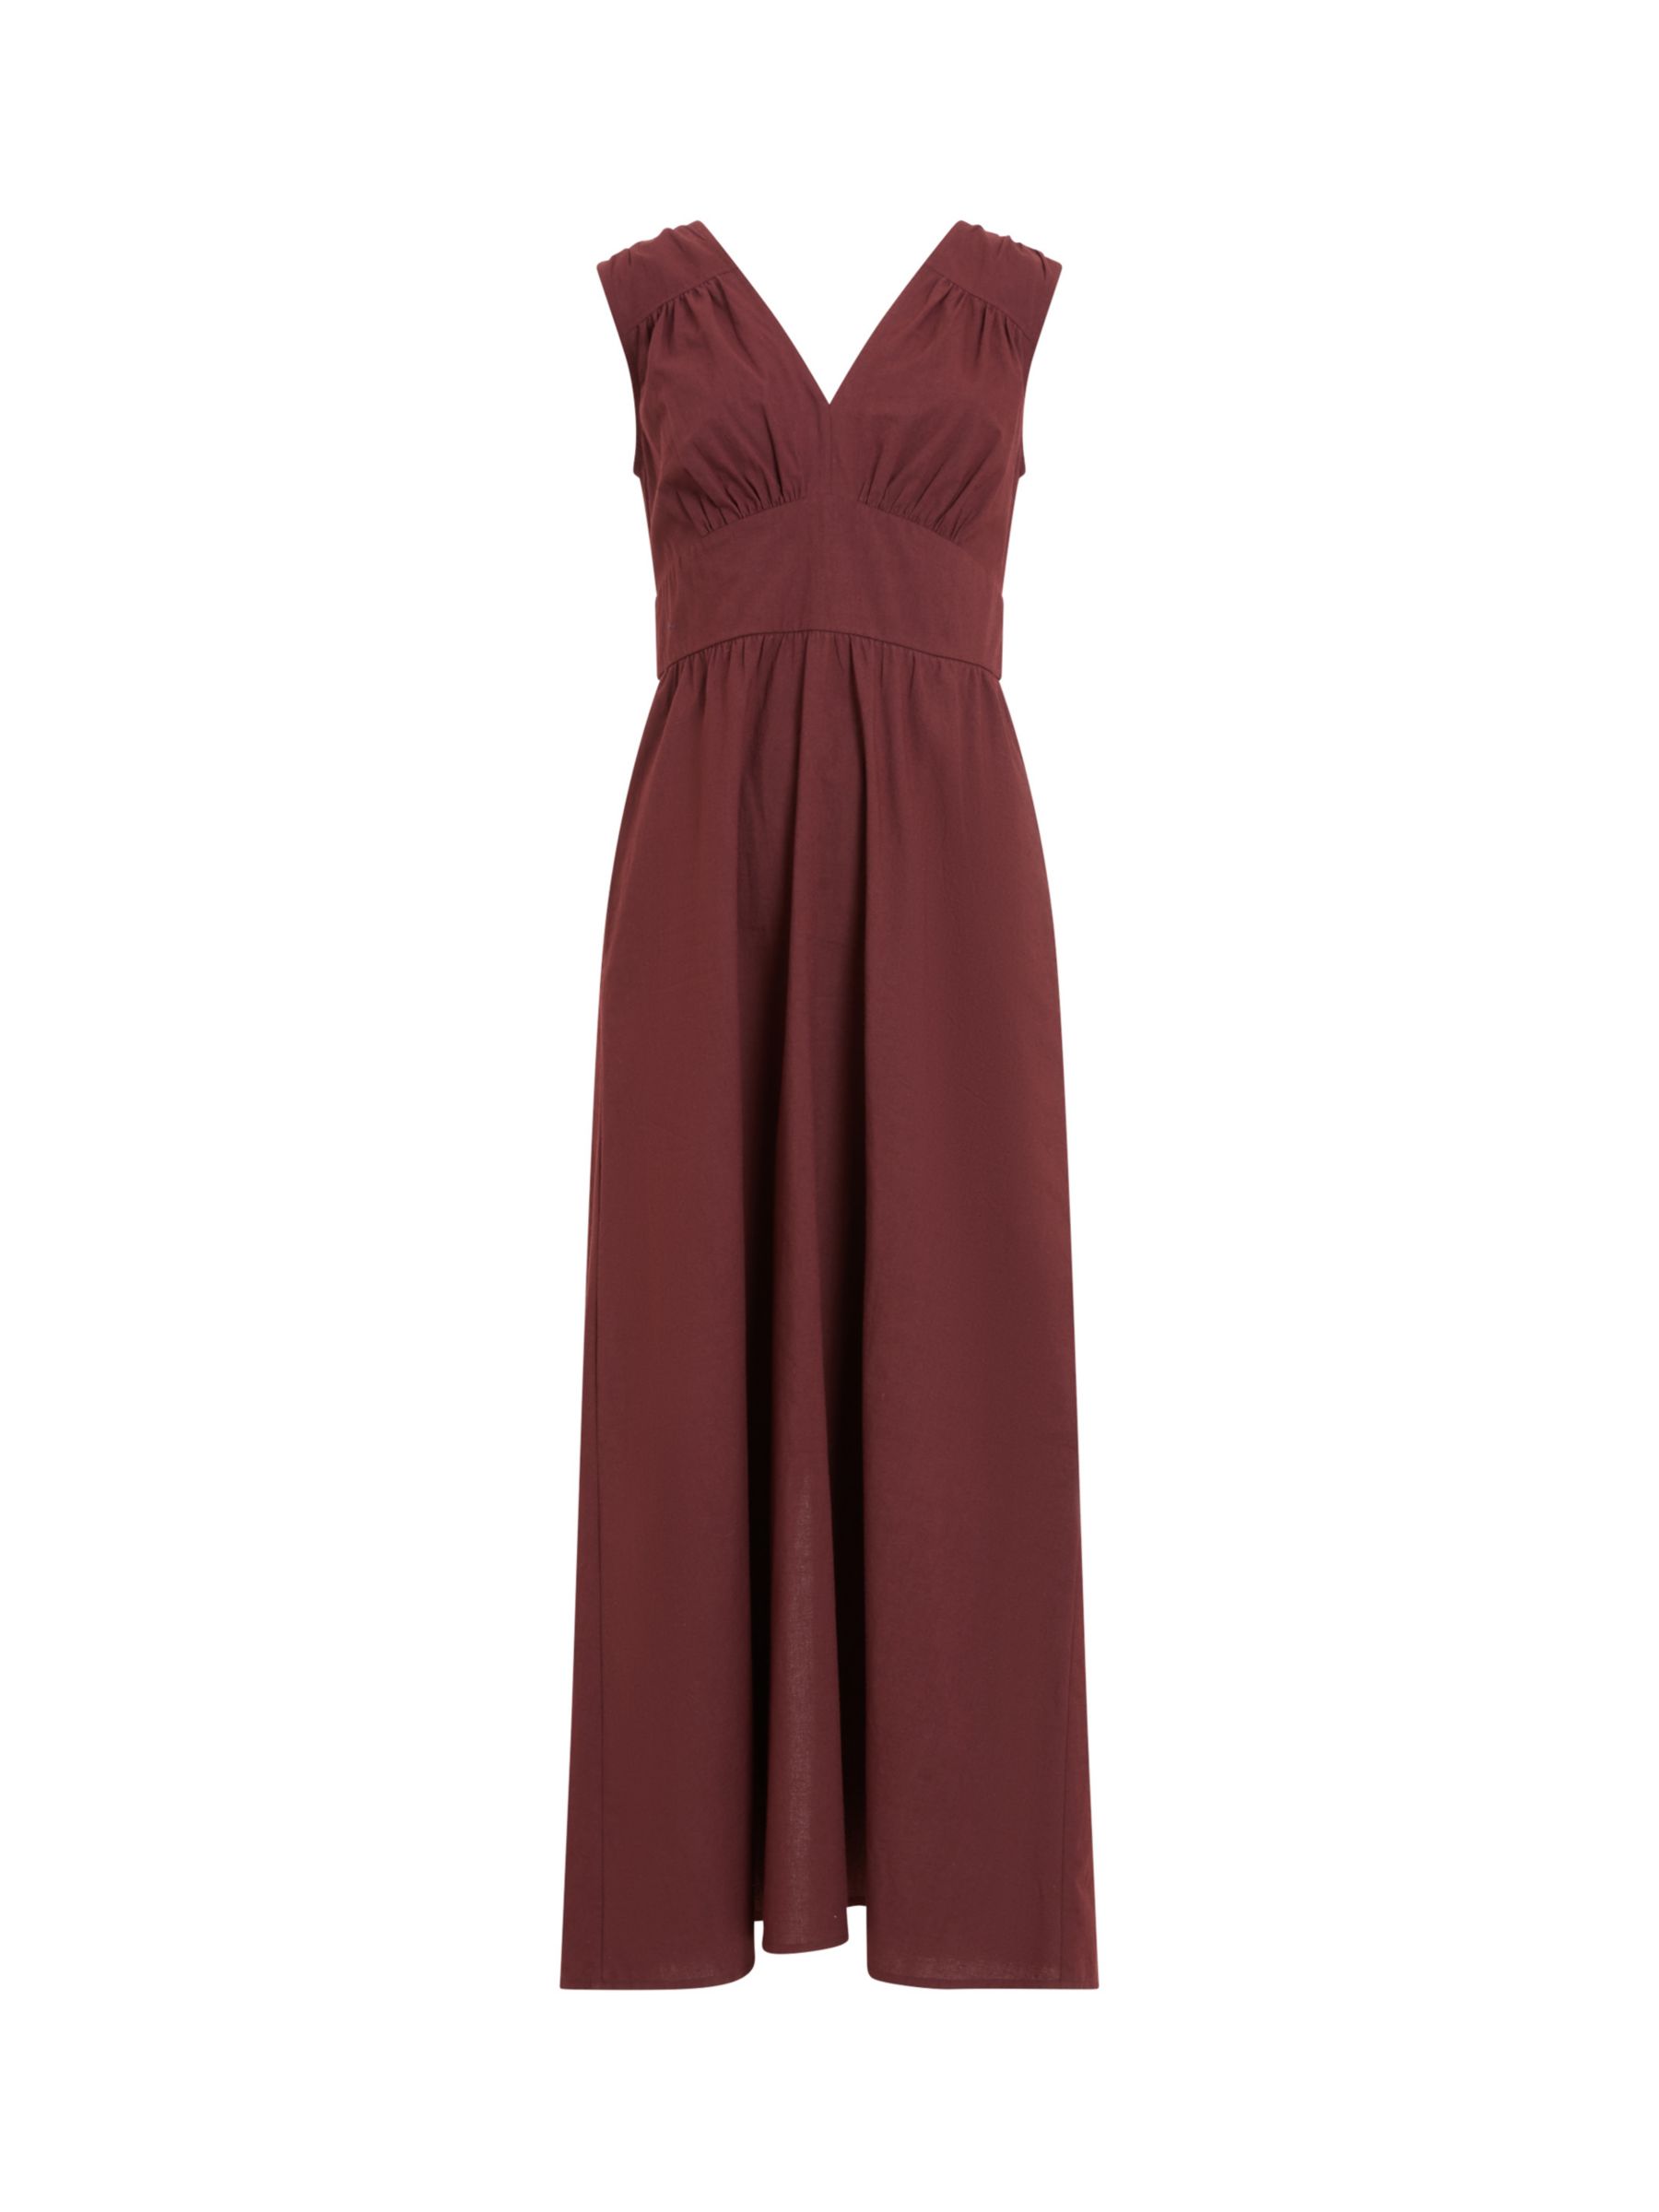 Buy Great Plains Sienna Organic Cotton Maxi Dress Online at johnlewis.com